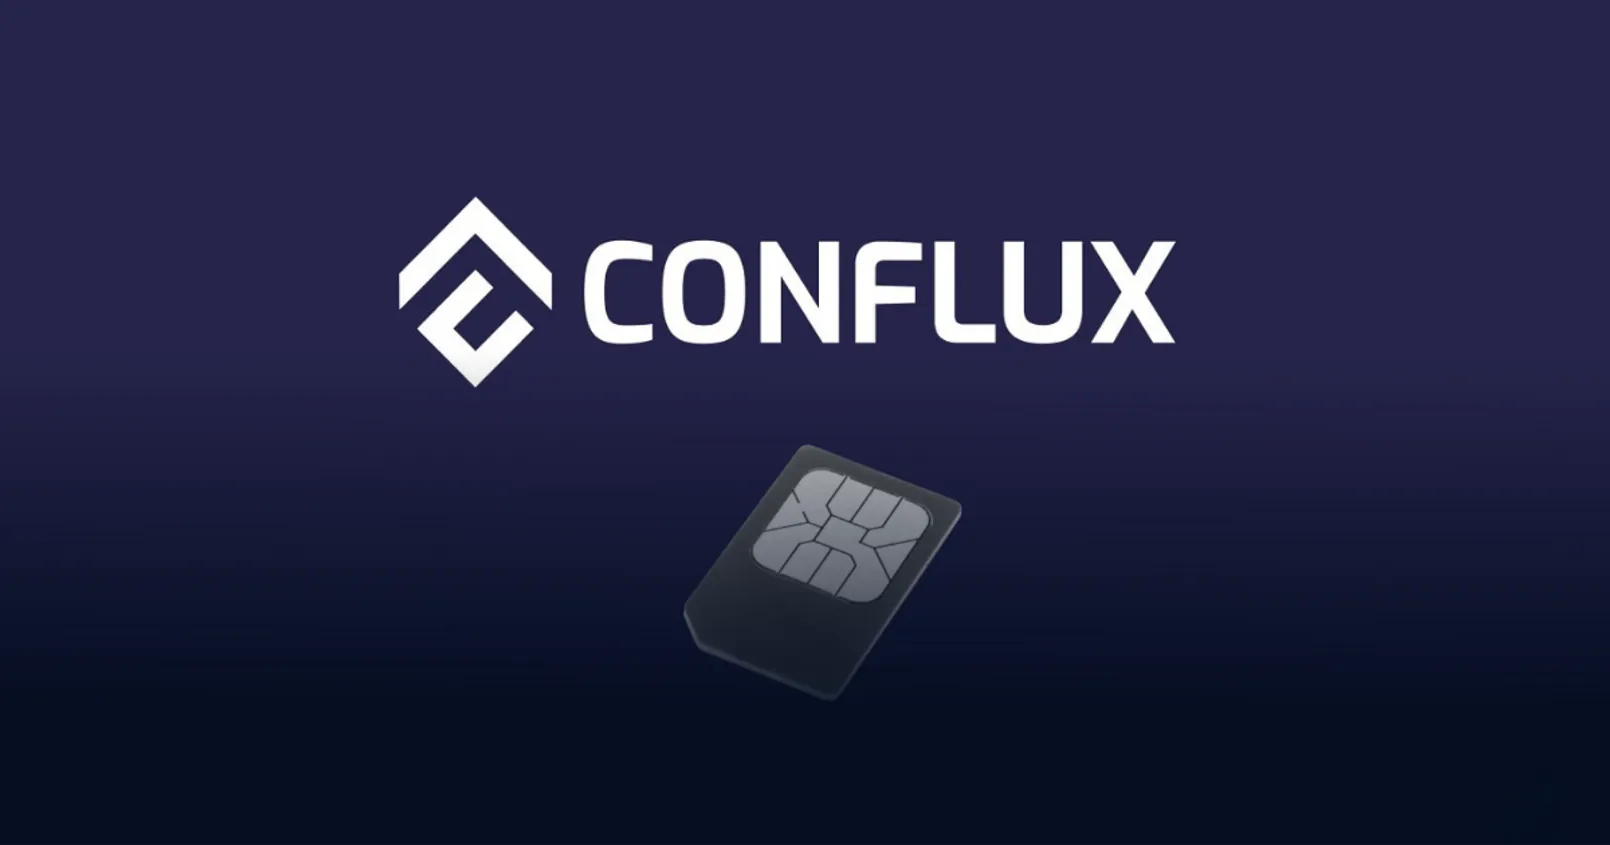 Conflux บริษัทวิจัยบล็อกเชนในประเทศจีน ร่วมมือกับบริษัท เทเลคอมในจีน สร้าง Blockchain SIM card 